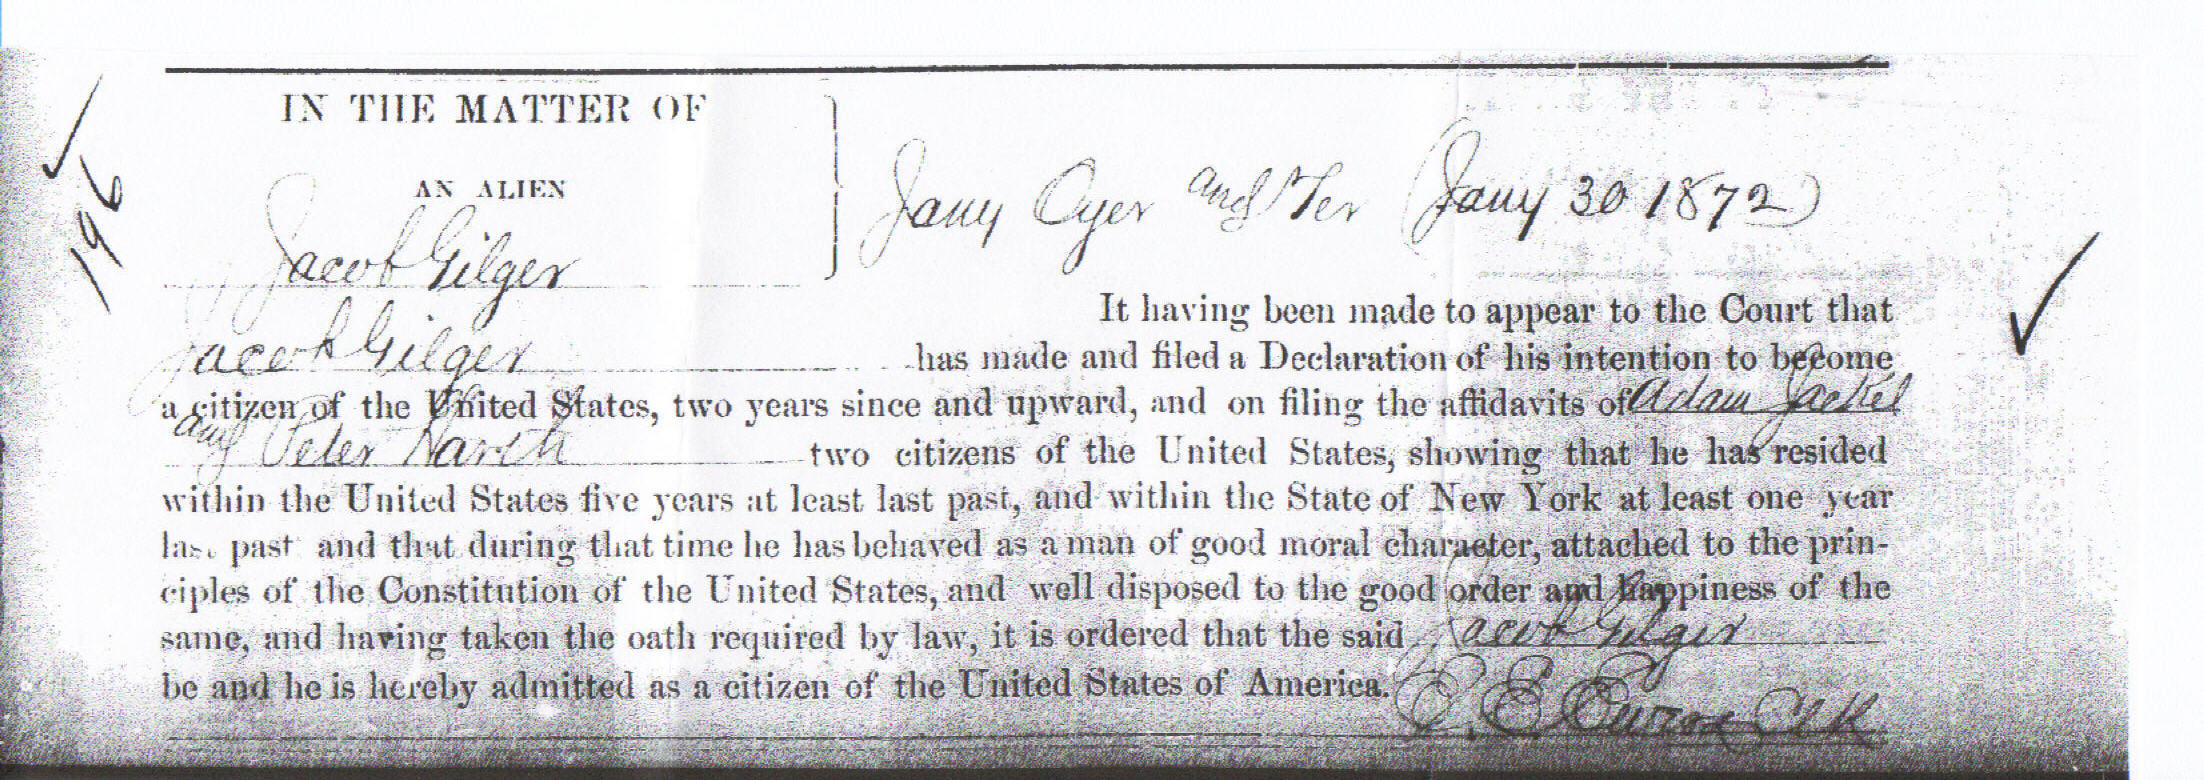 sample naturalization petition, 1872